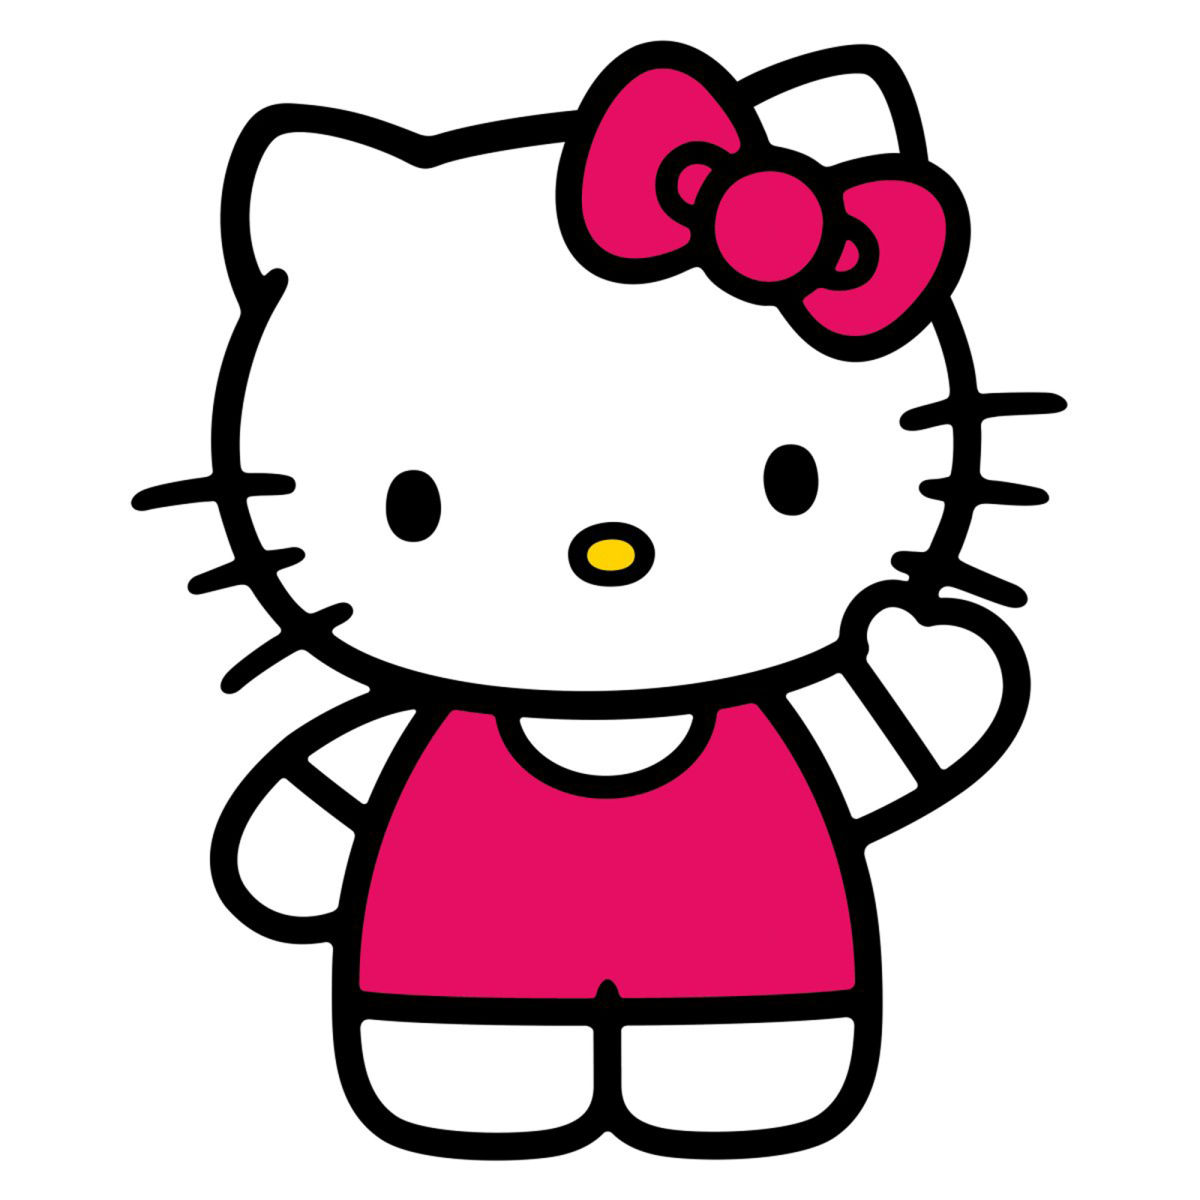 Gambar Kartun Hello Kitty Yang Mudah Digambar Terbaru Poskartun